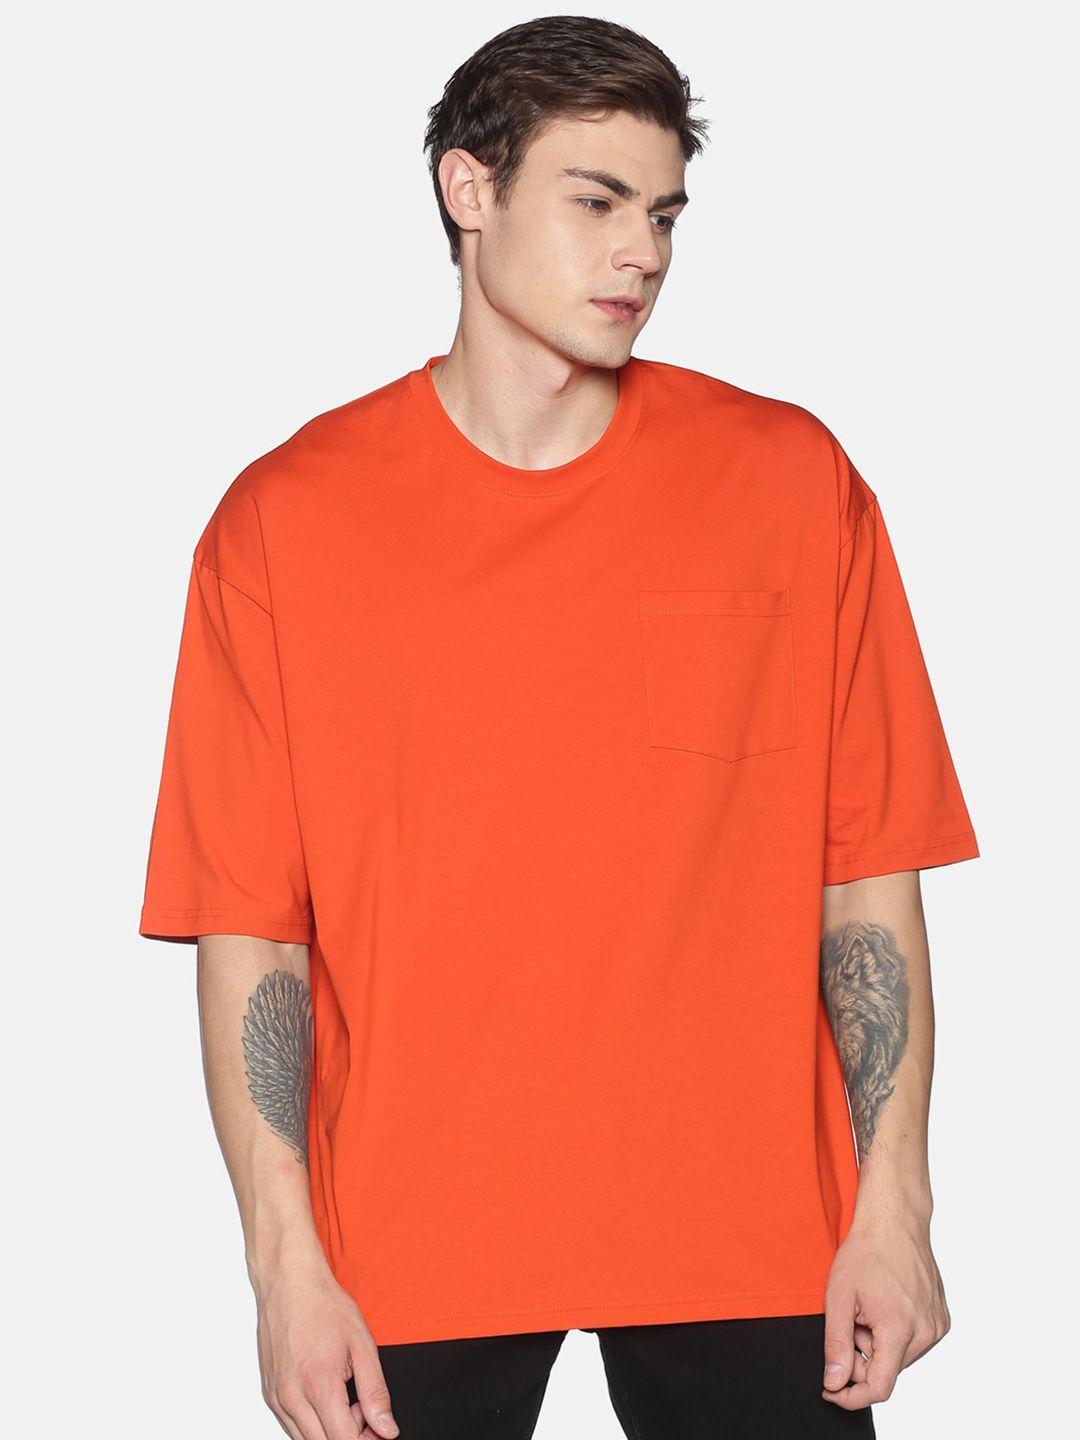 urgear-men-orange-solid-round-neck-pure-cotton-oversized-pure-cotton-t-shirt